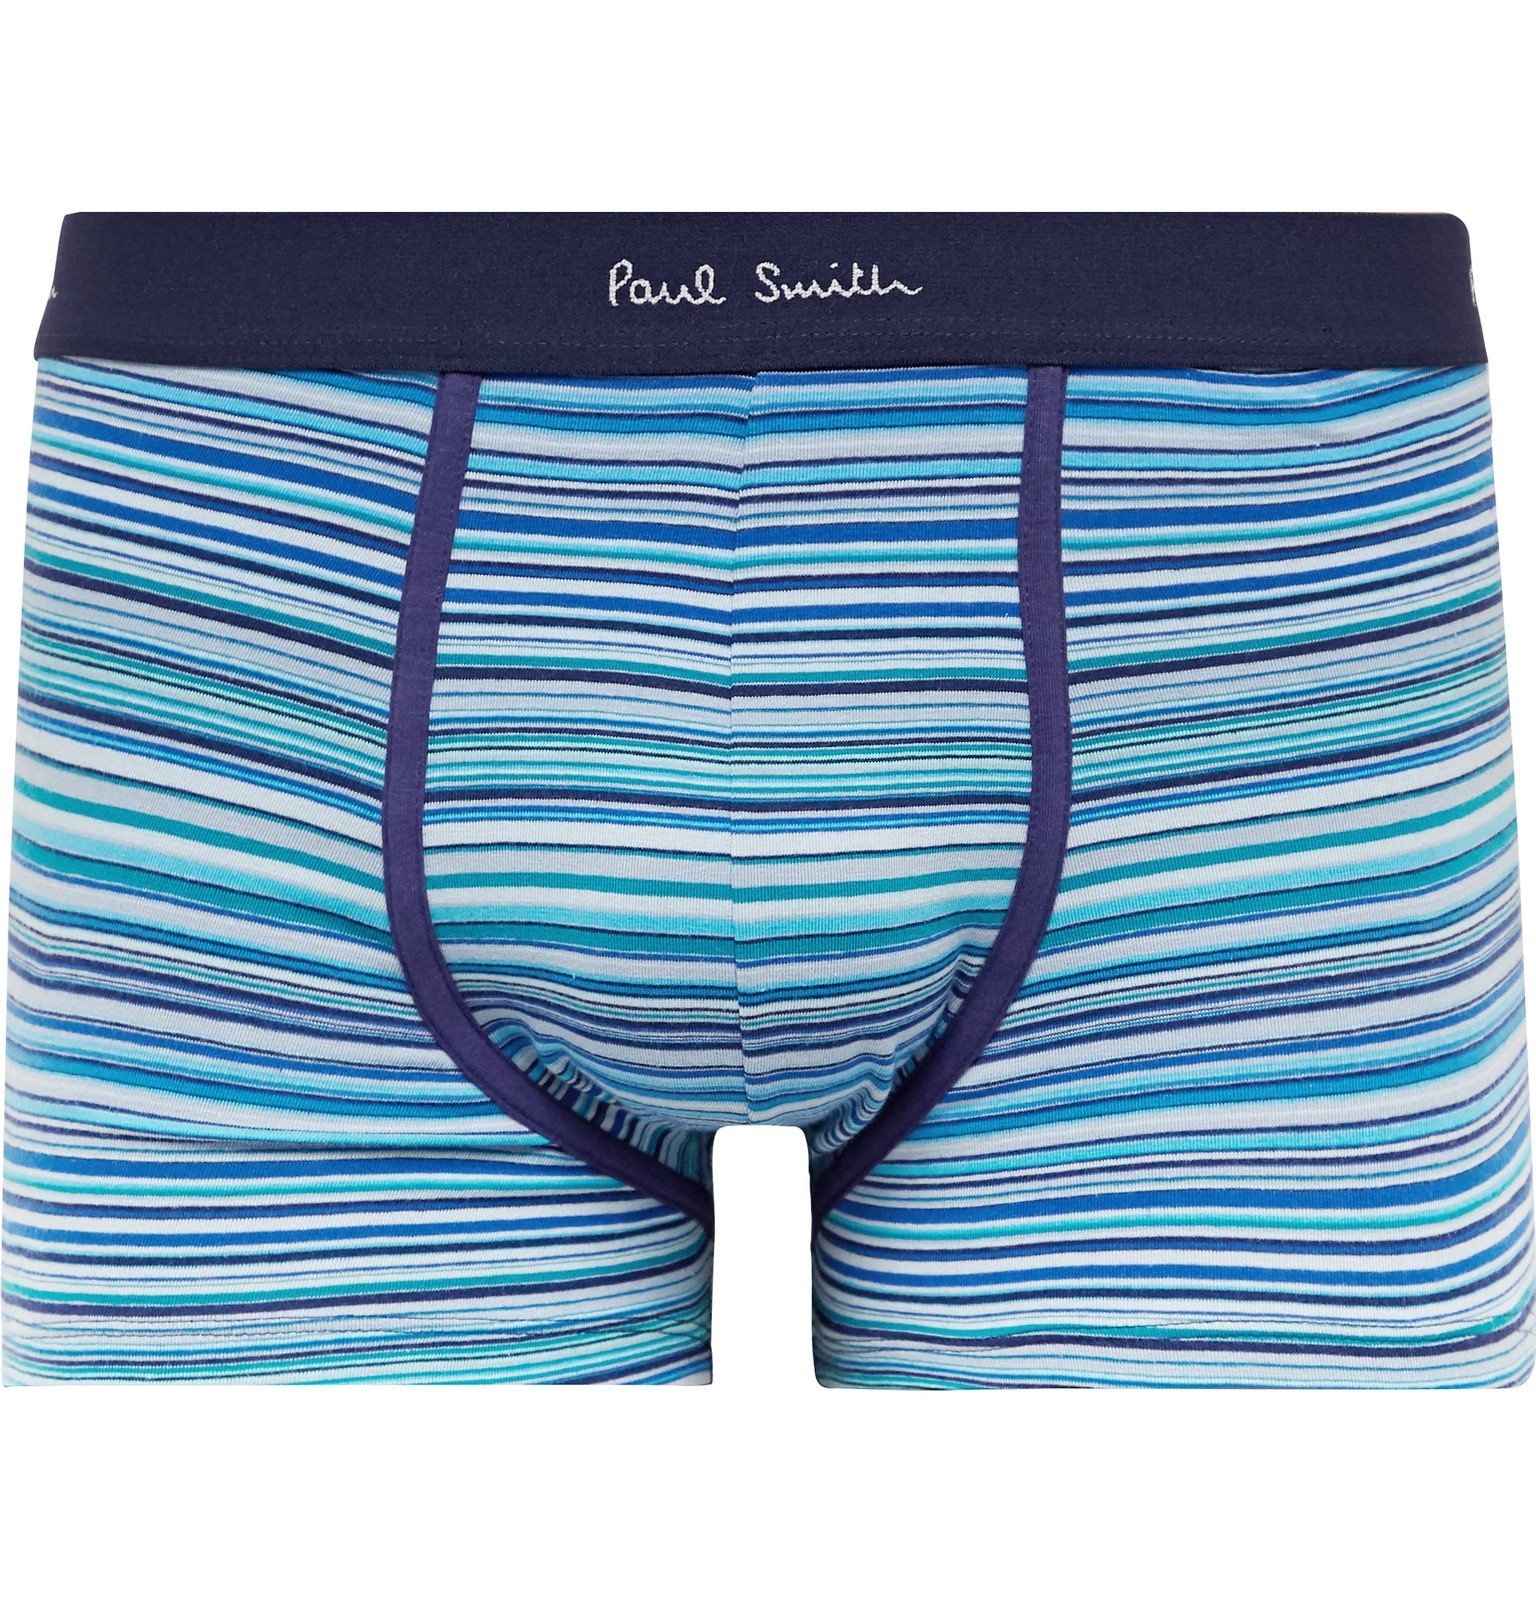 Paul Smith - Striped Stretch-Cotton Boxer Briefs - Blue Paul Smith